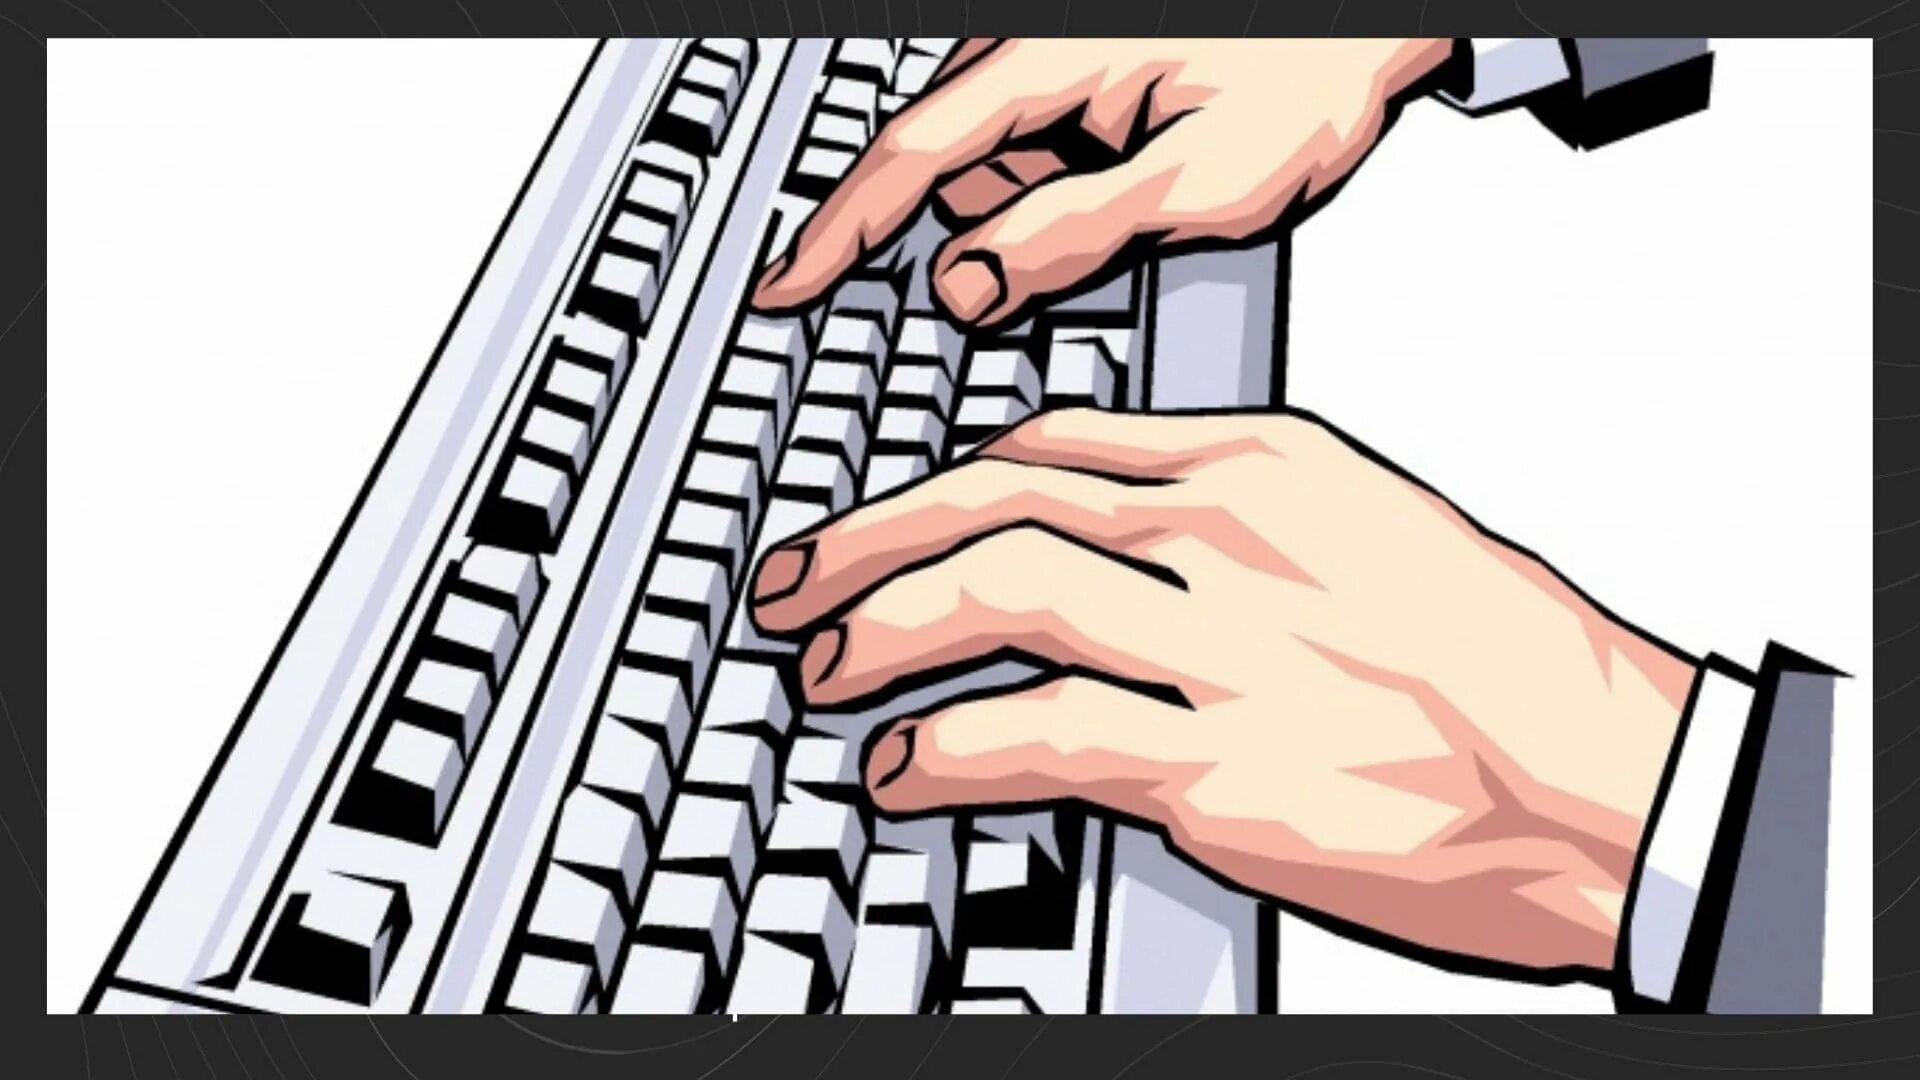 Typing topic. Руки на клавиатуре. Печатающий человек. Печатает на компьютере. Набор текста.